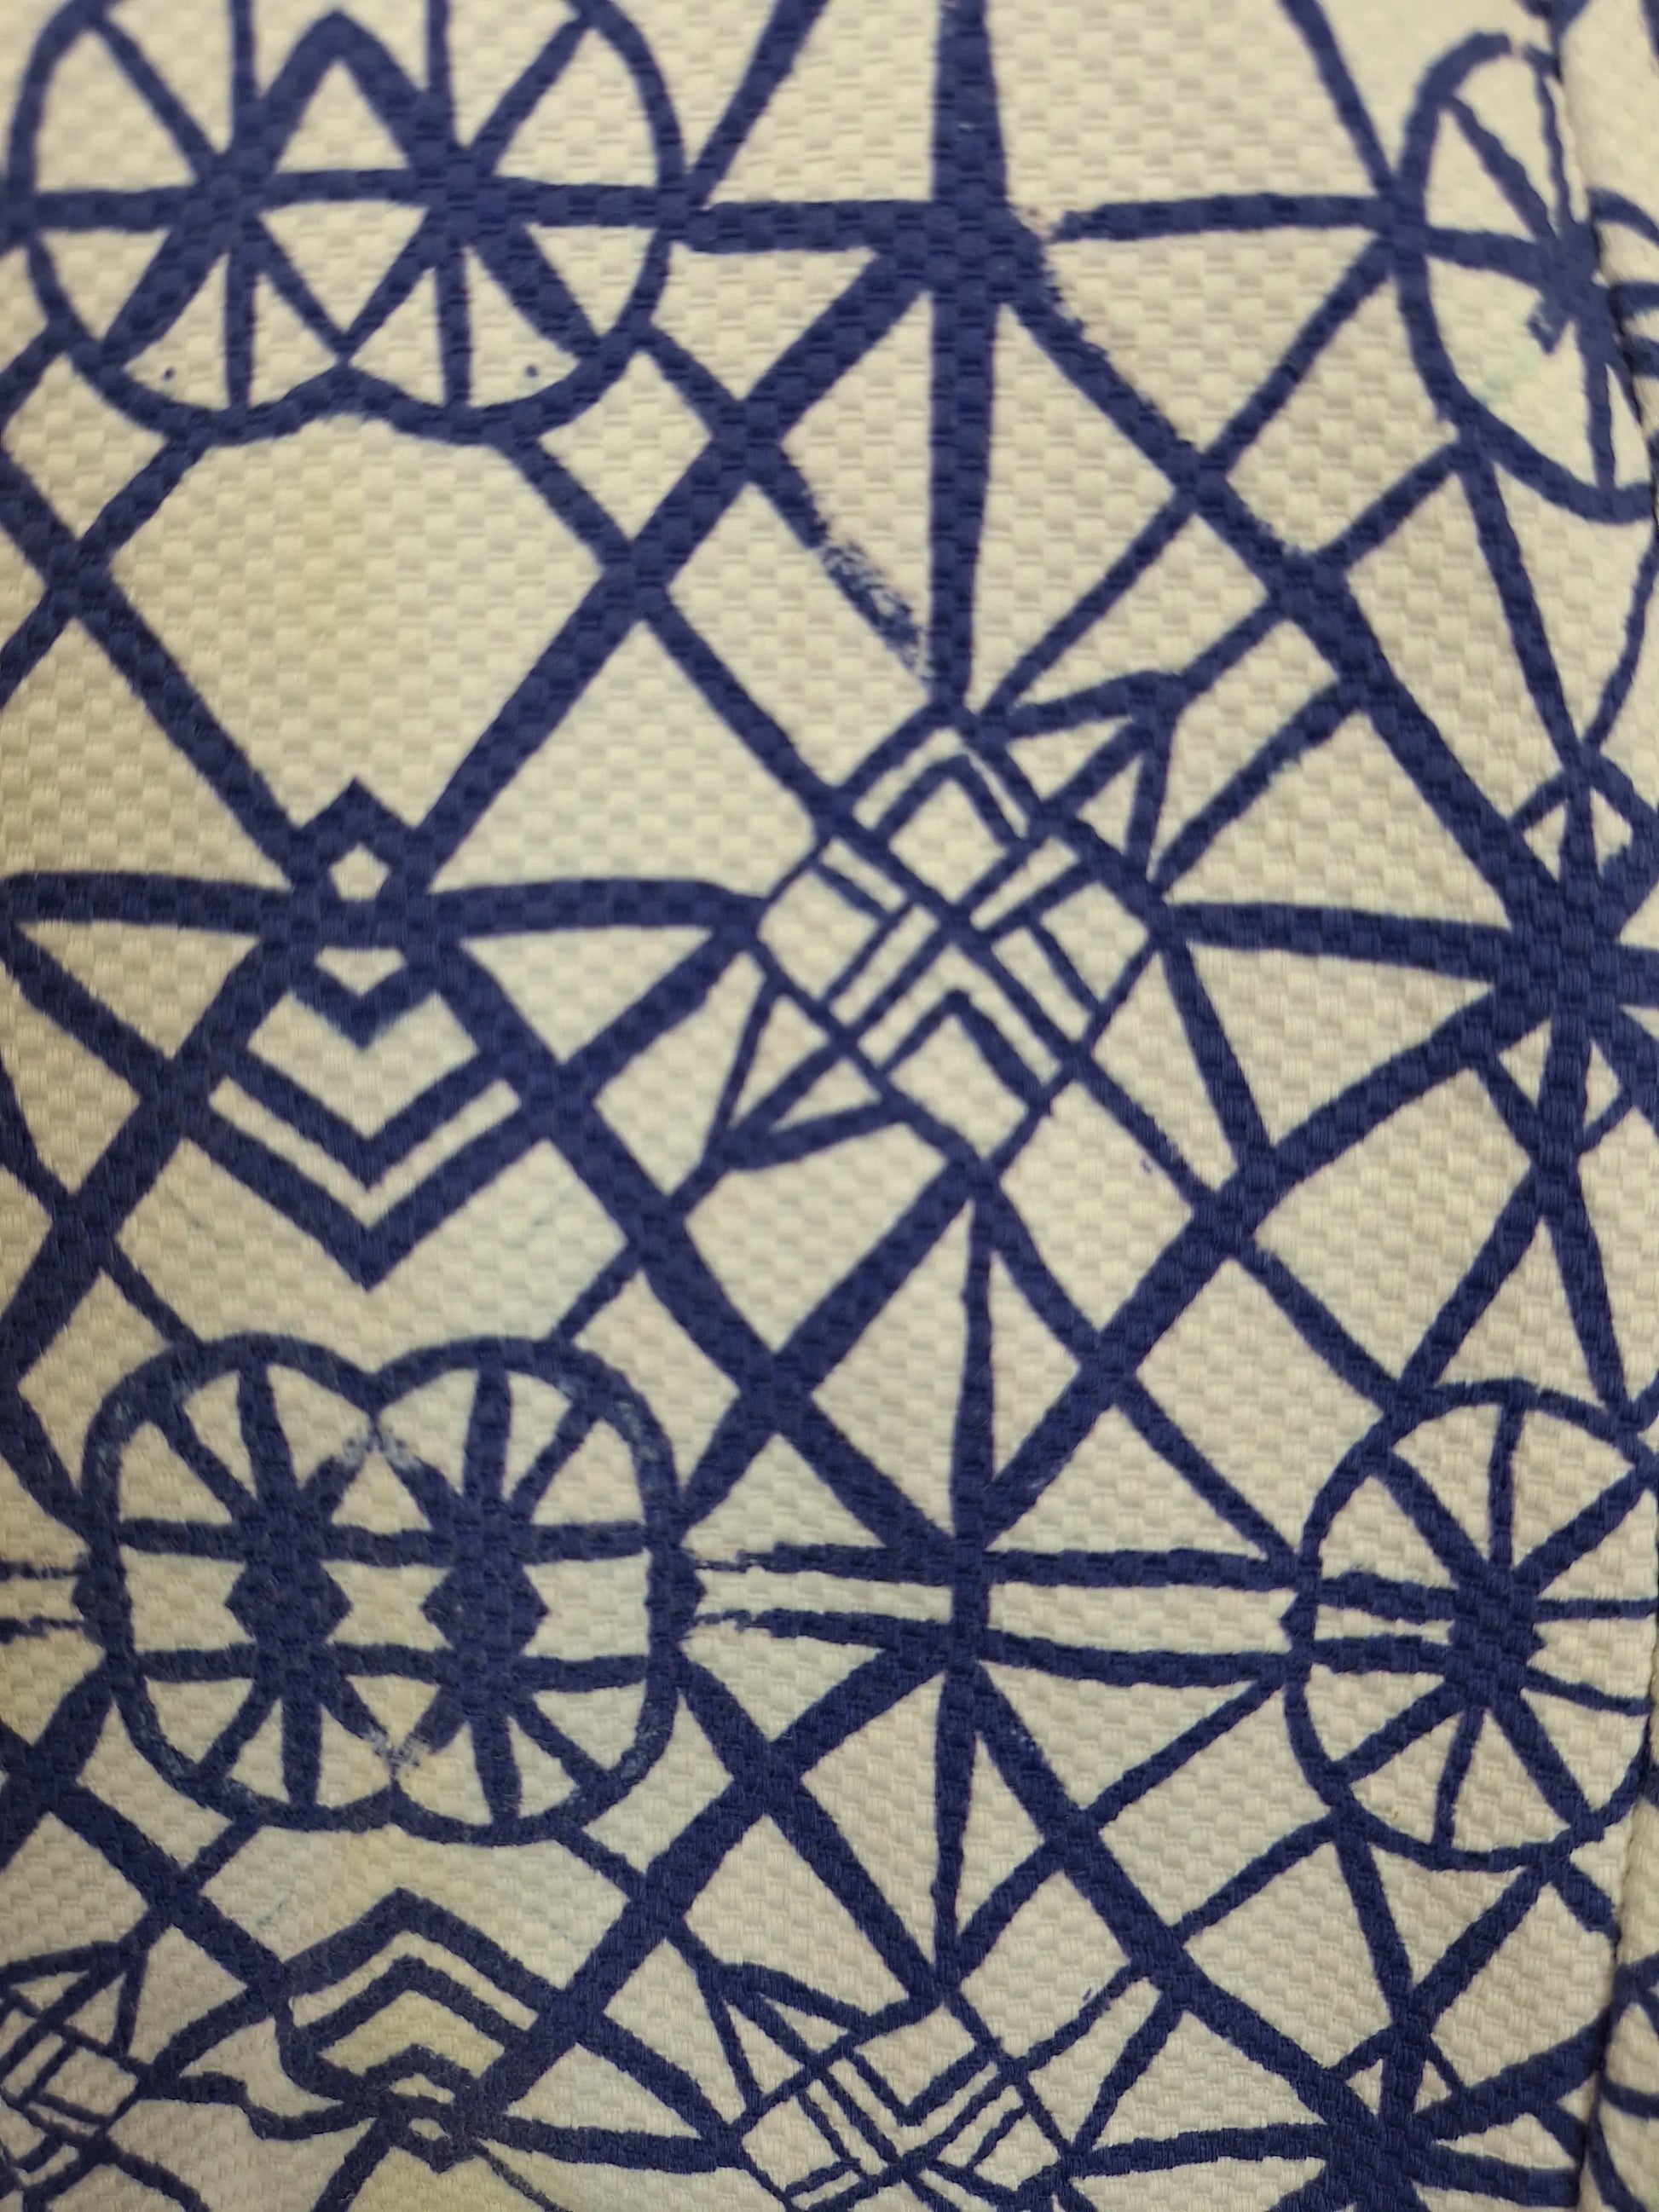 Sacha Drake Print Tie Waist Midi Dress Size 12 by SwapUp-Online Second Hand Store-Online Thrift Store